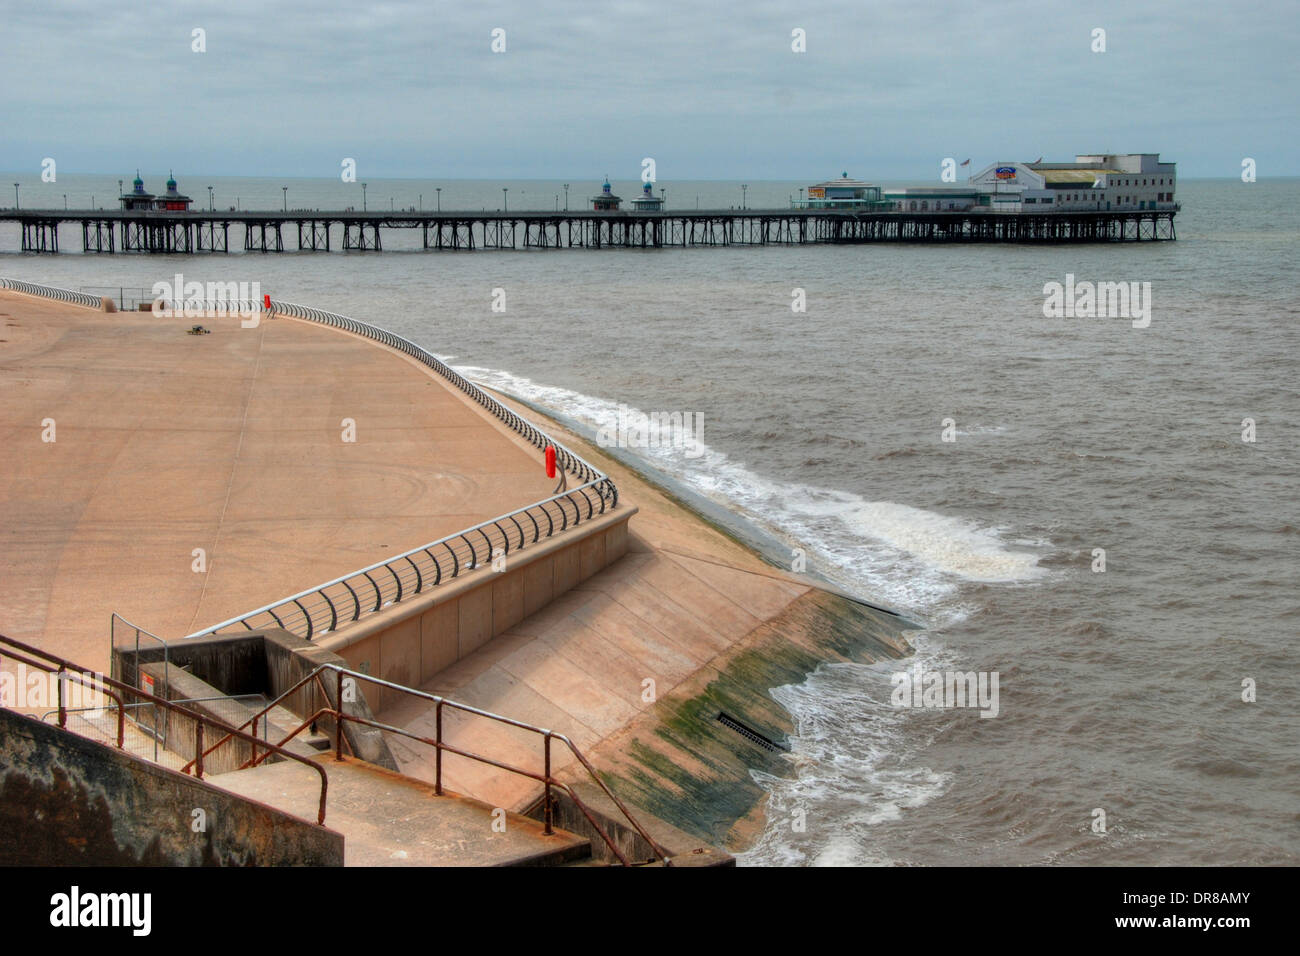 The North Pier at Blackpool, Englahd Stock Photo